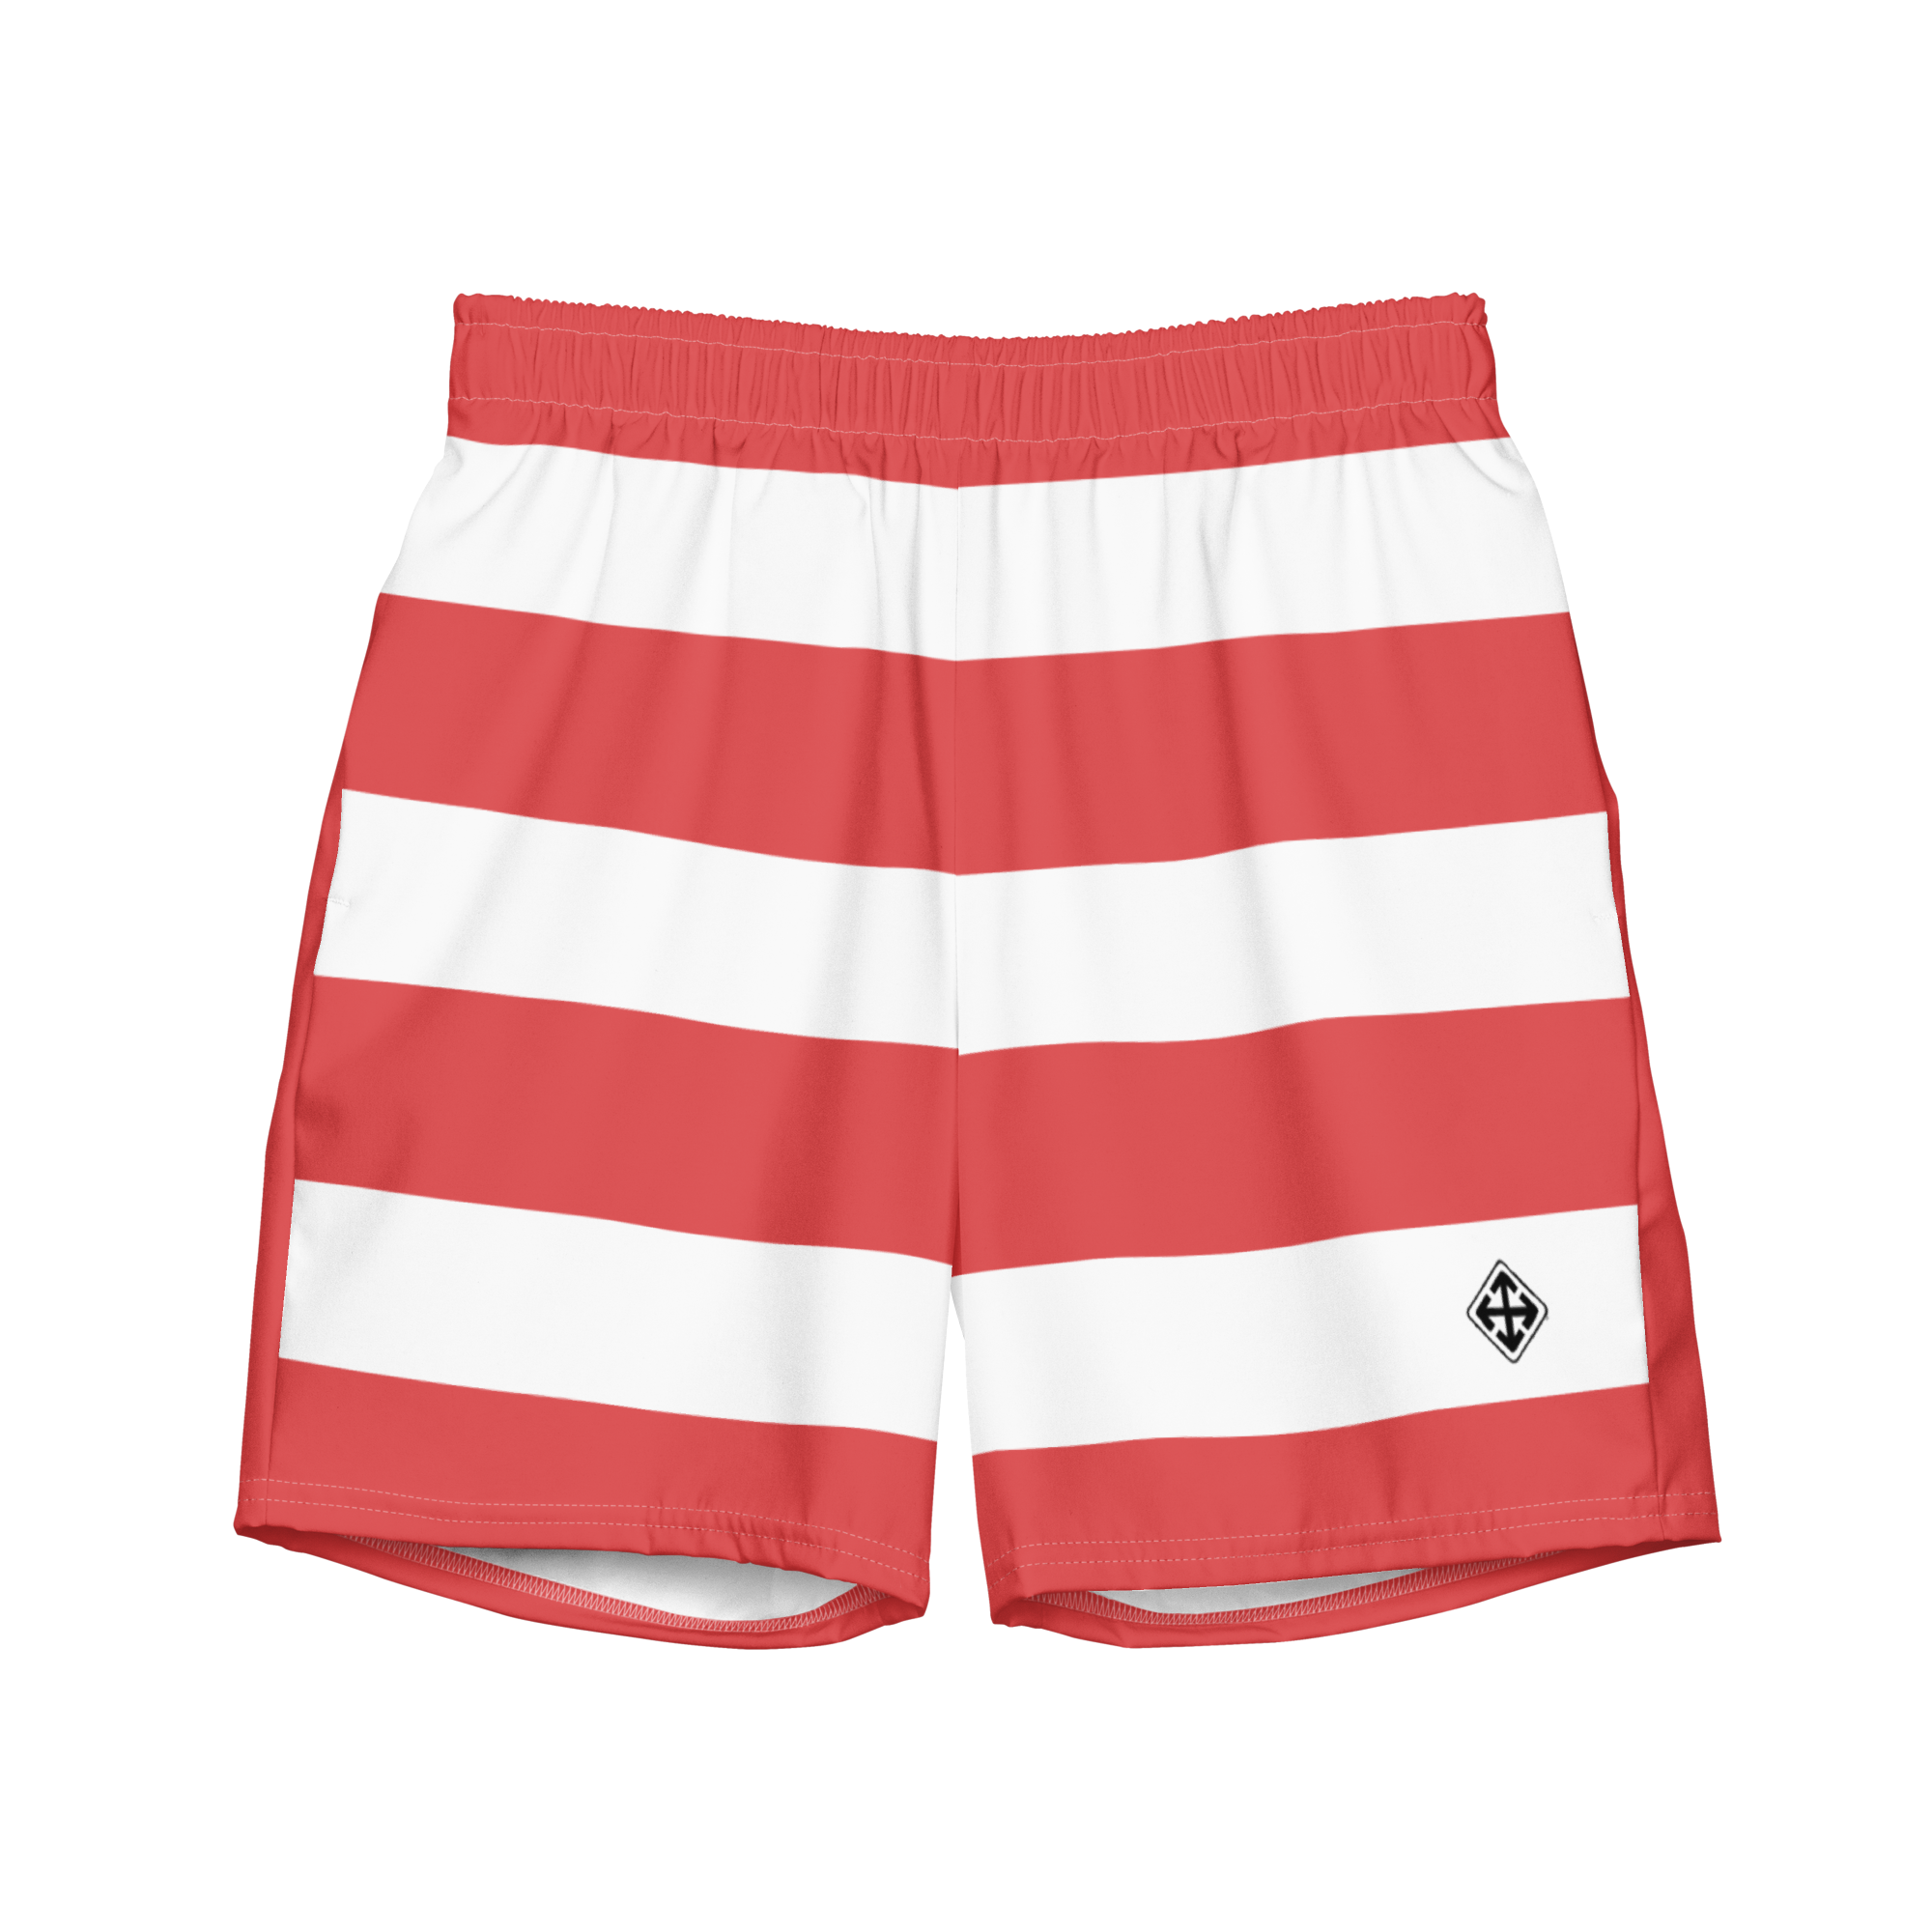 Jail Hose Board Shorts - Greg Noll Style Vintage Swim Trunks | Evoke Apparel